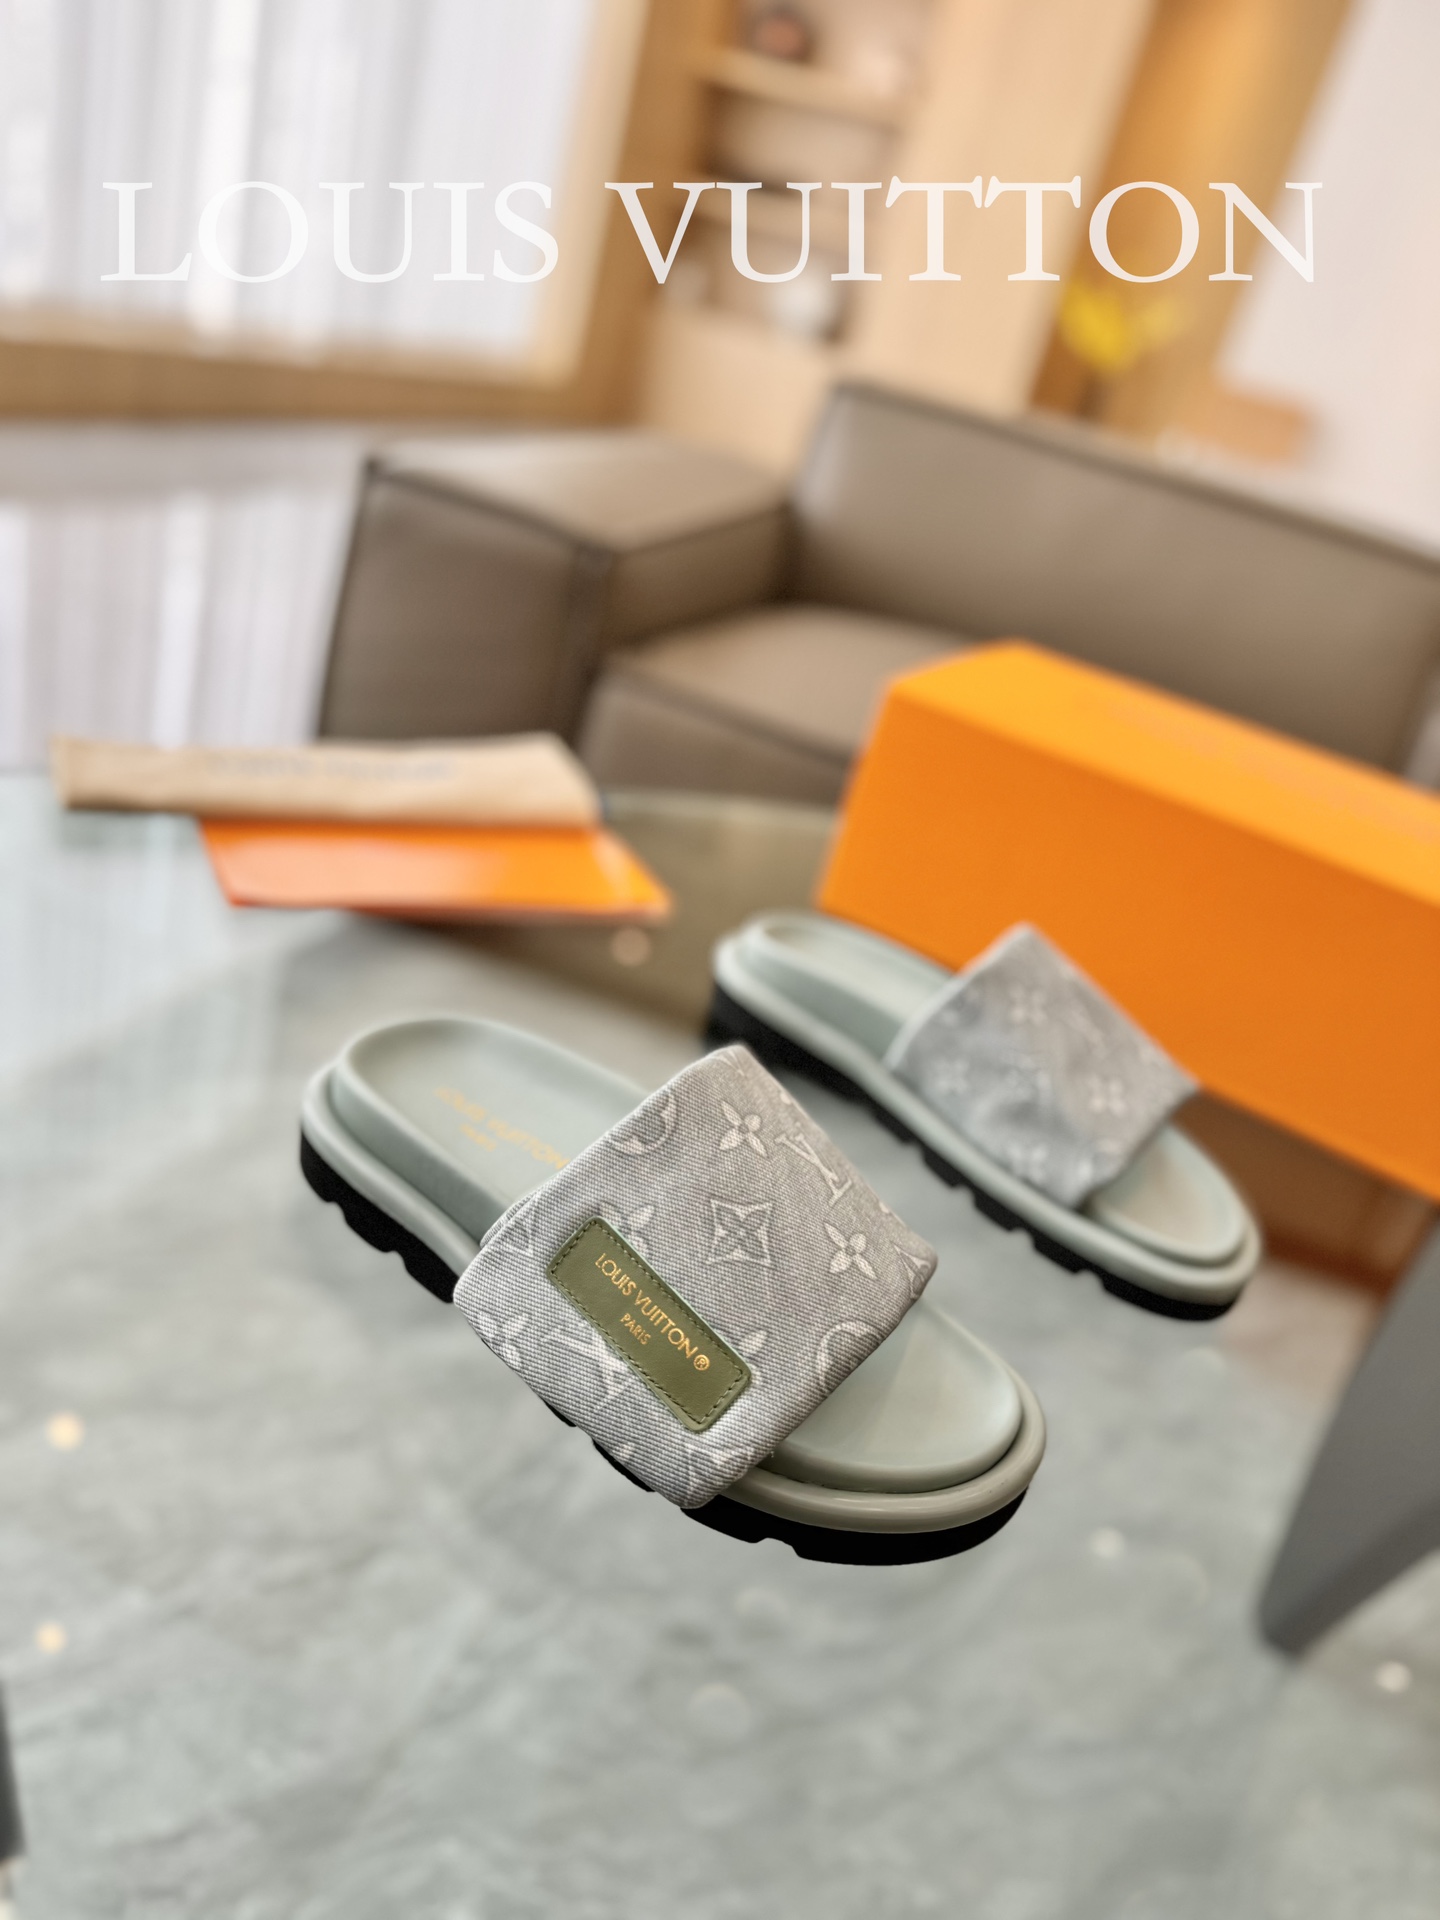 Mirror copia il lusso
 Louis Vuitton Nuovo
 Scarpe Pantofole Unisex Pelle di capra pecora Vintage